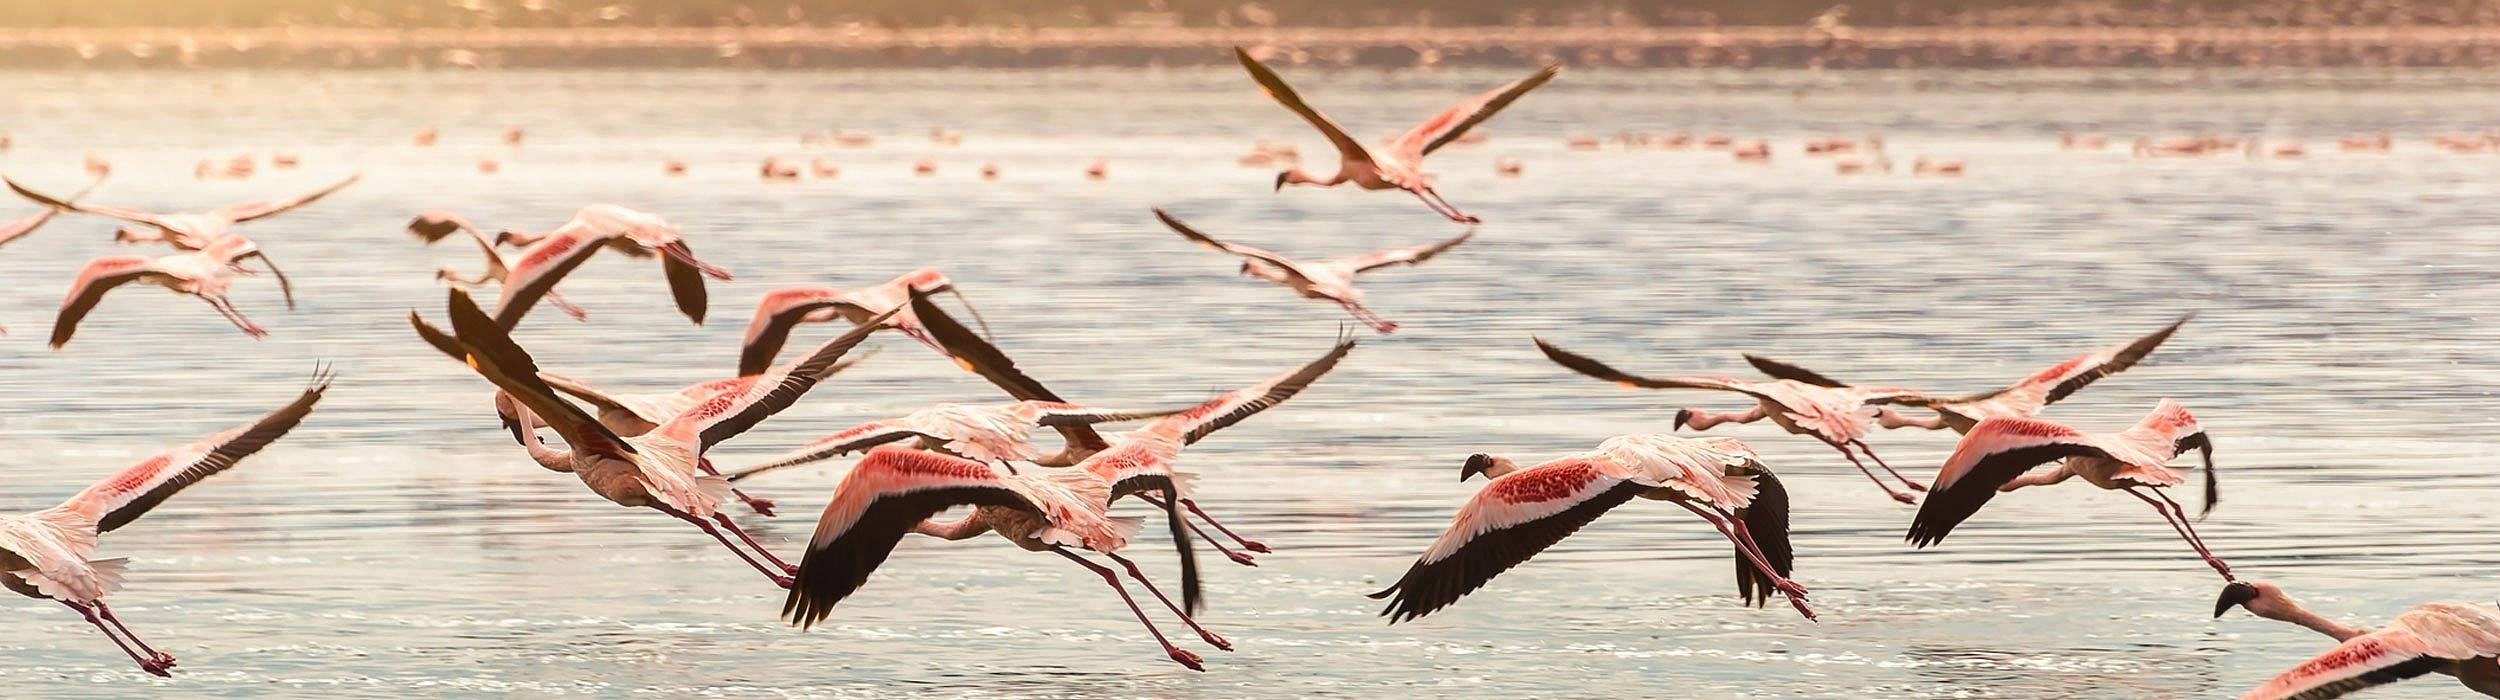 Flamingo's bij Lake Oloiden, Kenia